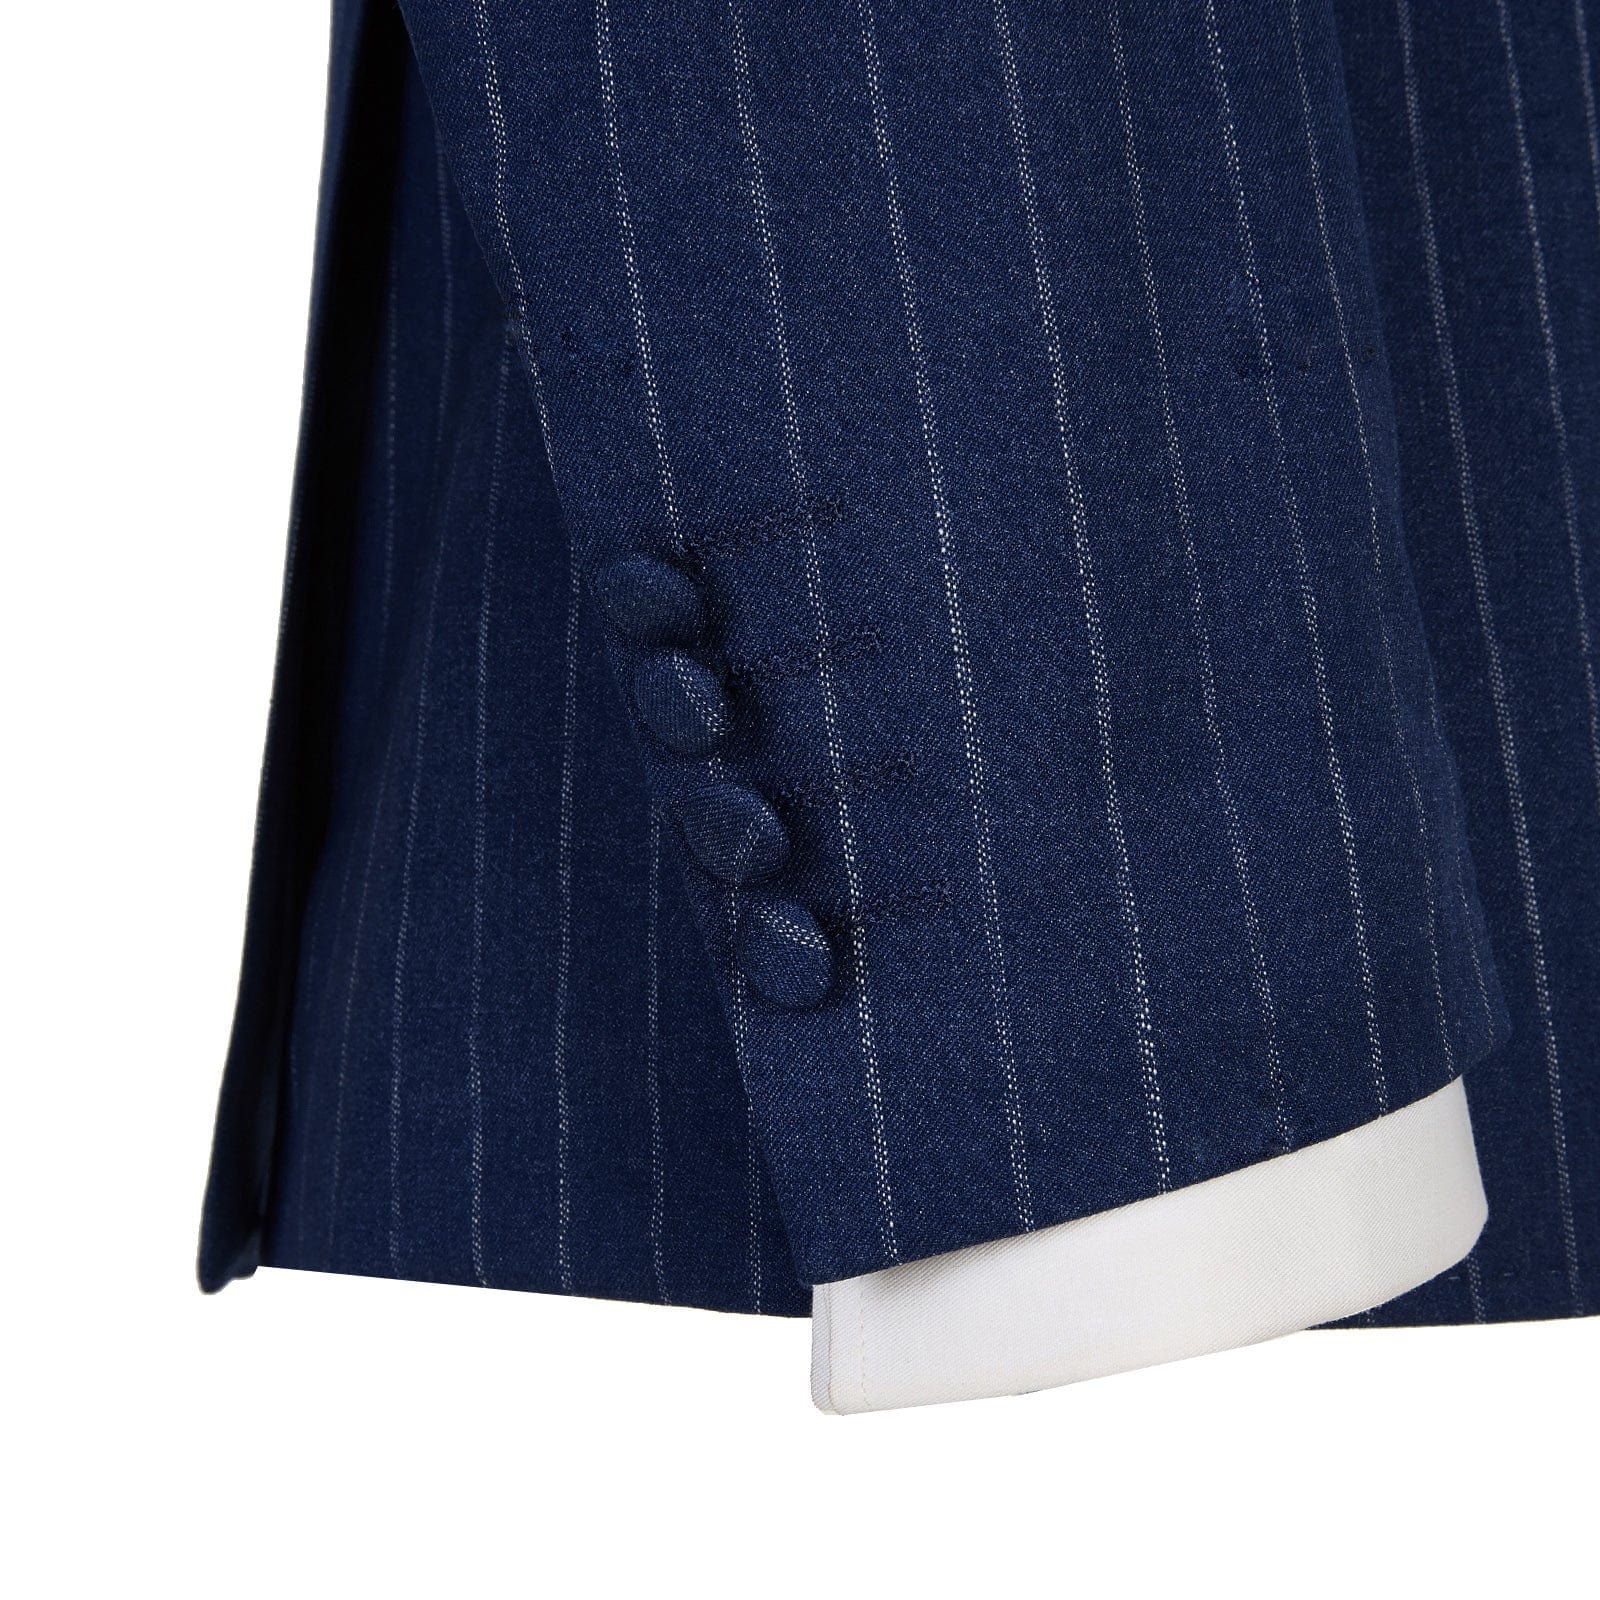 ceehuteey Formal Striped 3 Pieces Mens Peak Lapel Suit Tuxedos (Blazer+Pants)